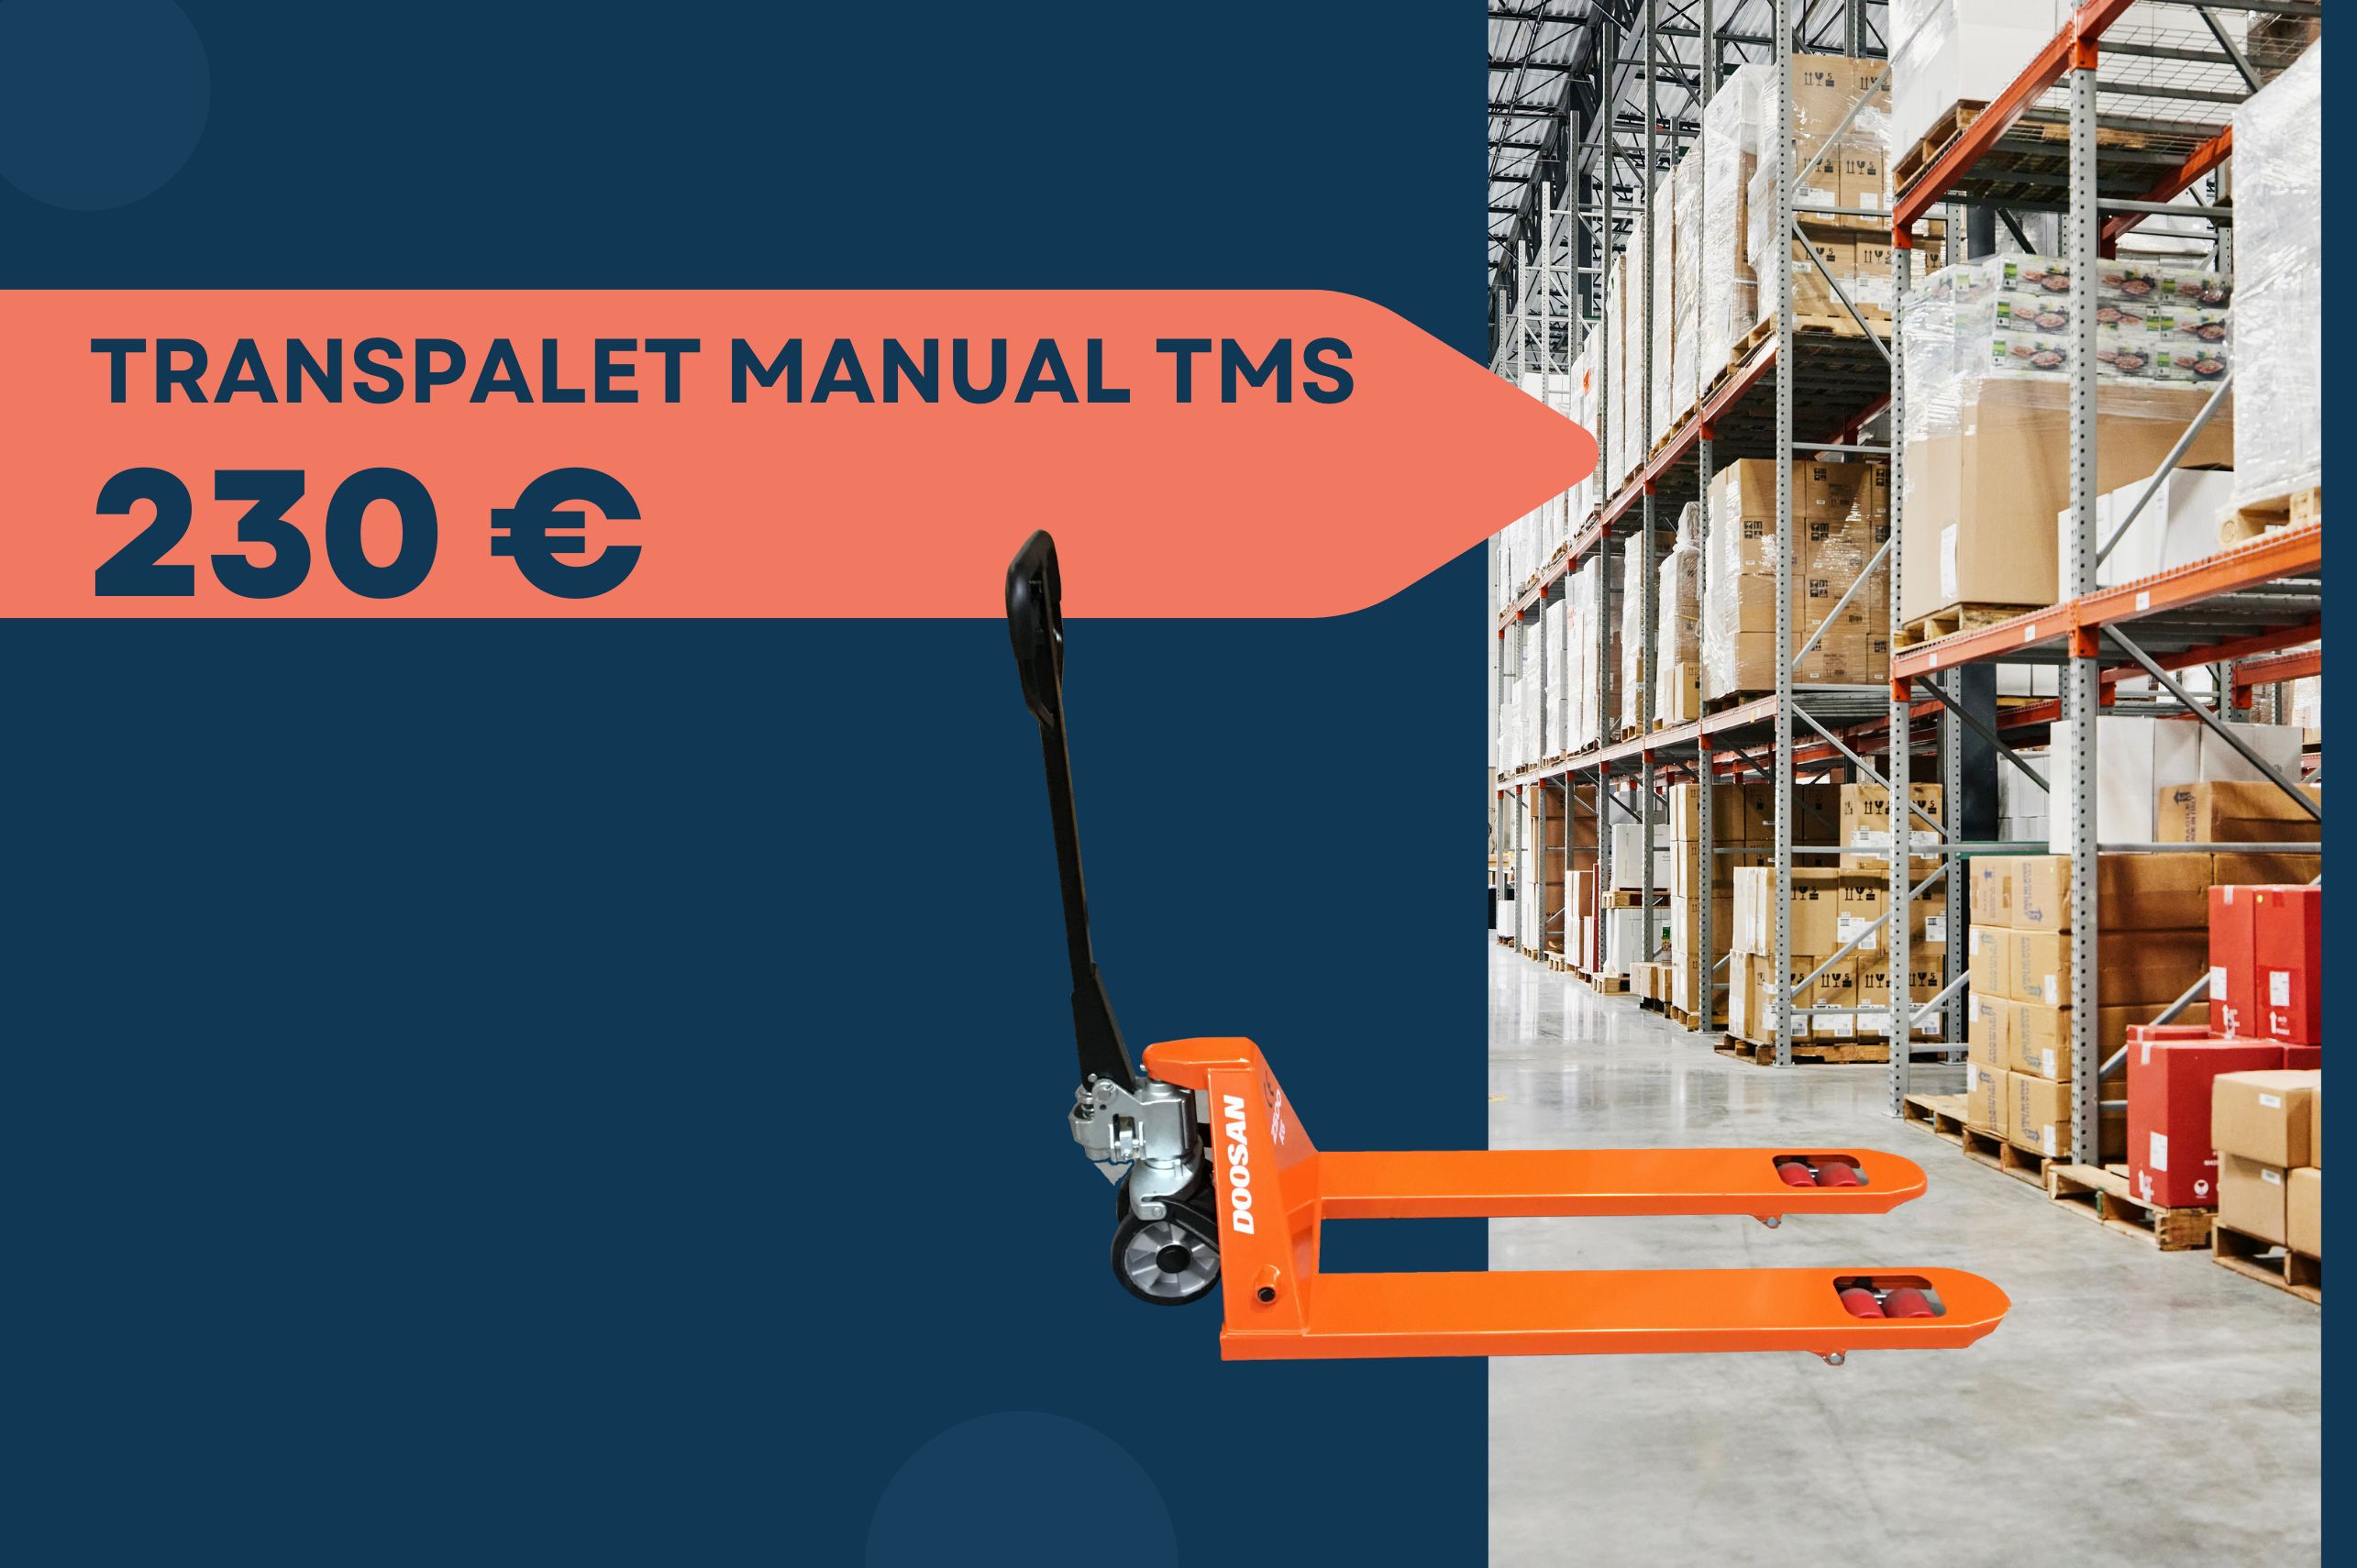 Transpalet manual TMS